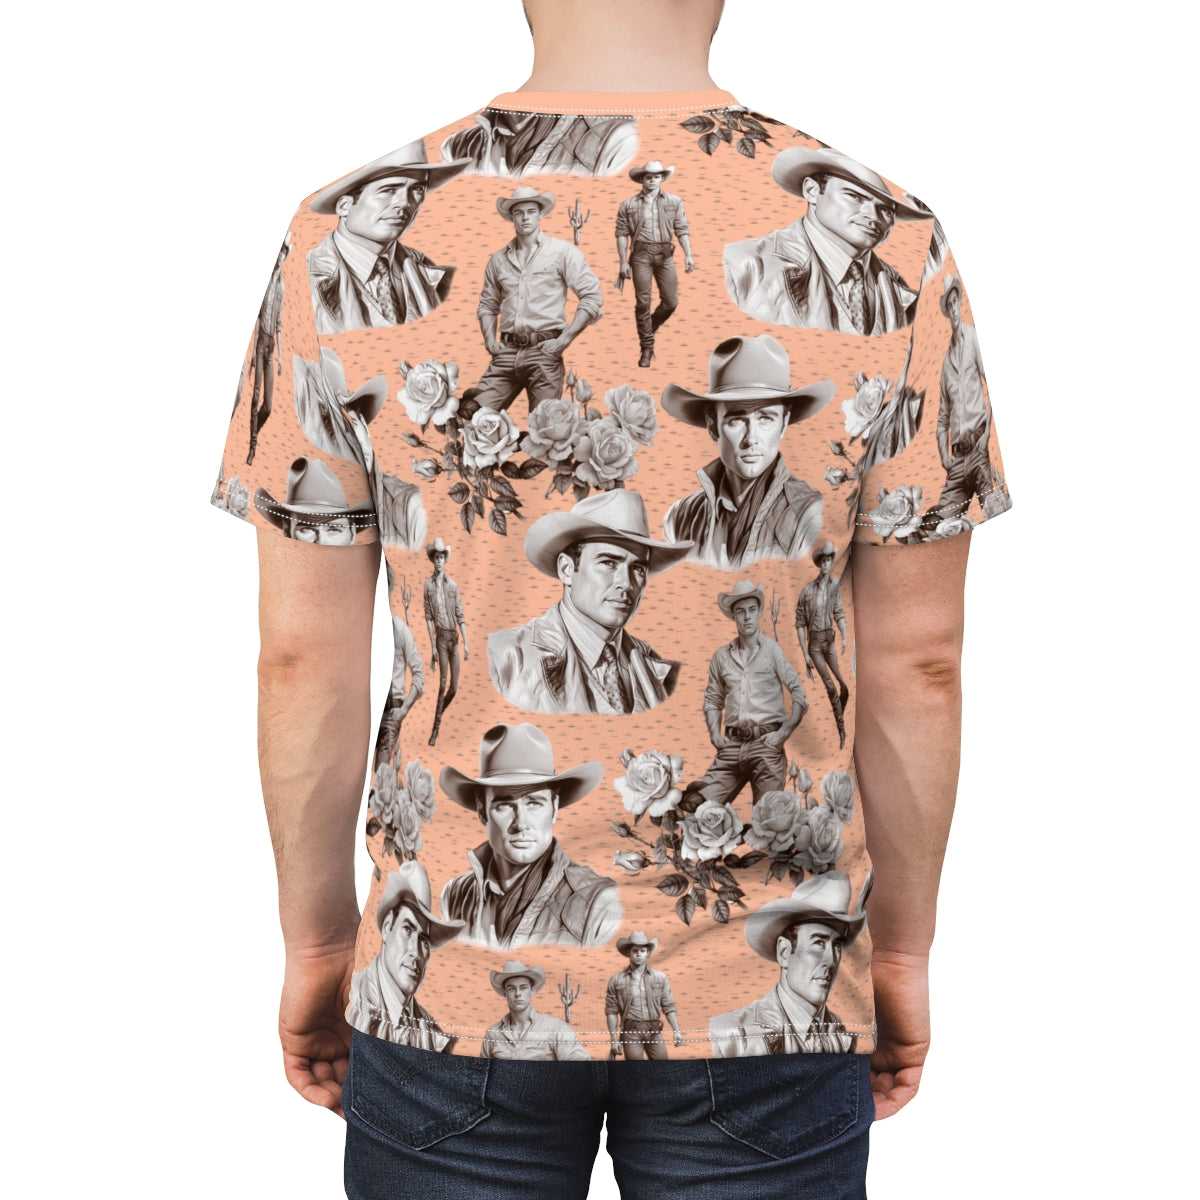 Handsome Cowboys Toile (Peach) T-Shirt by Studio Ten Design